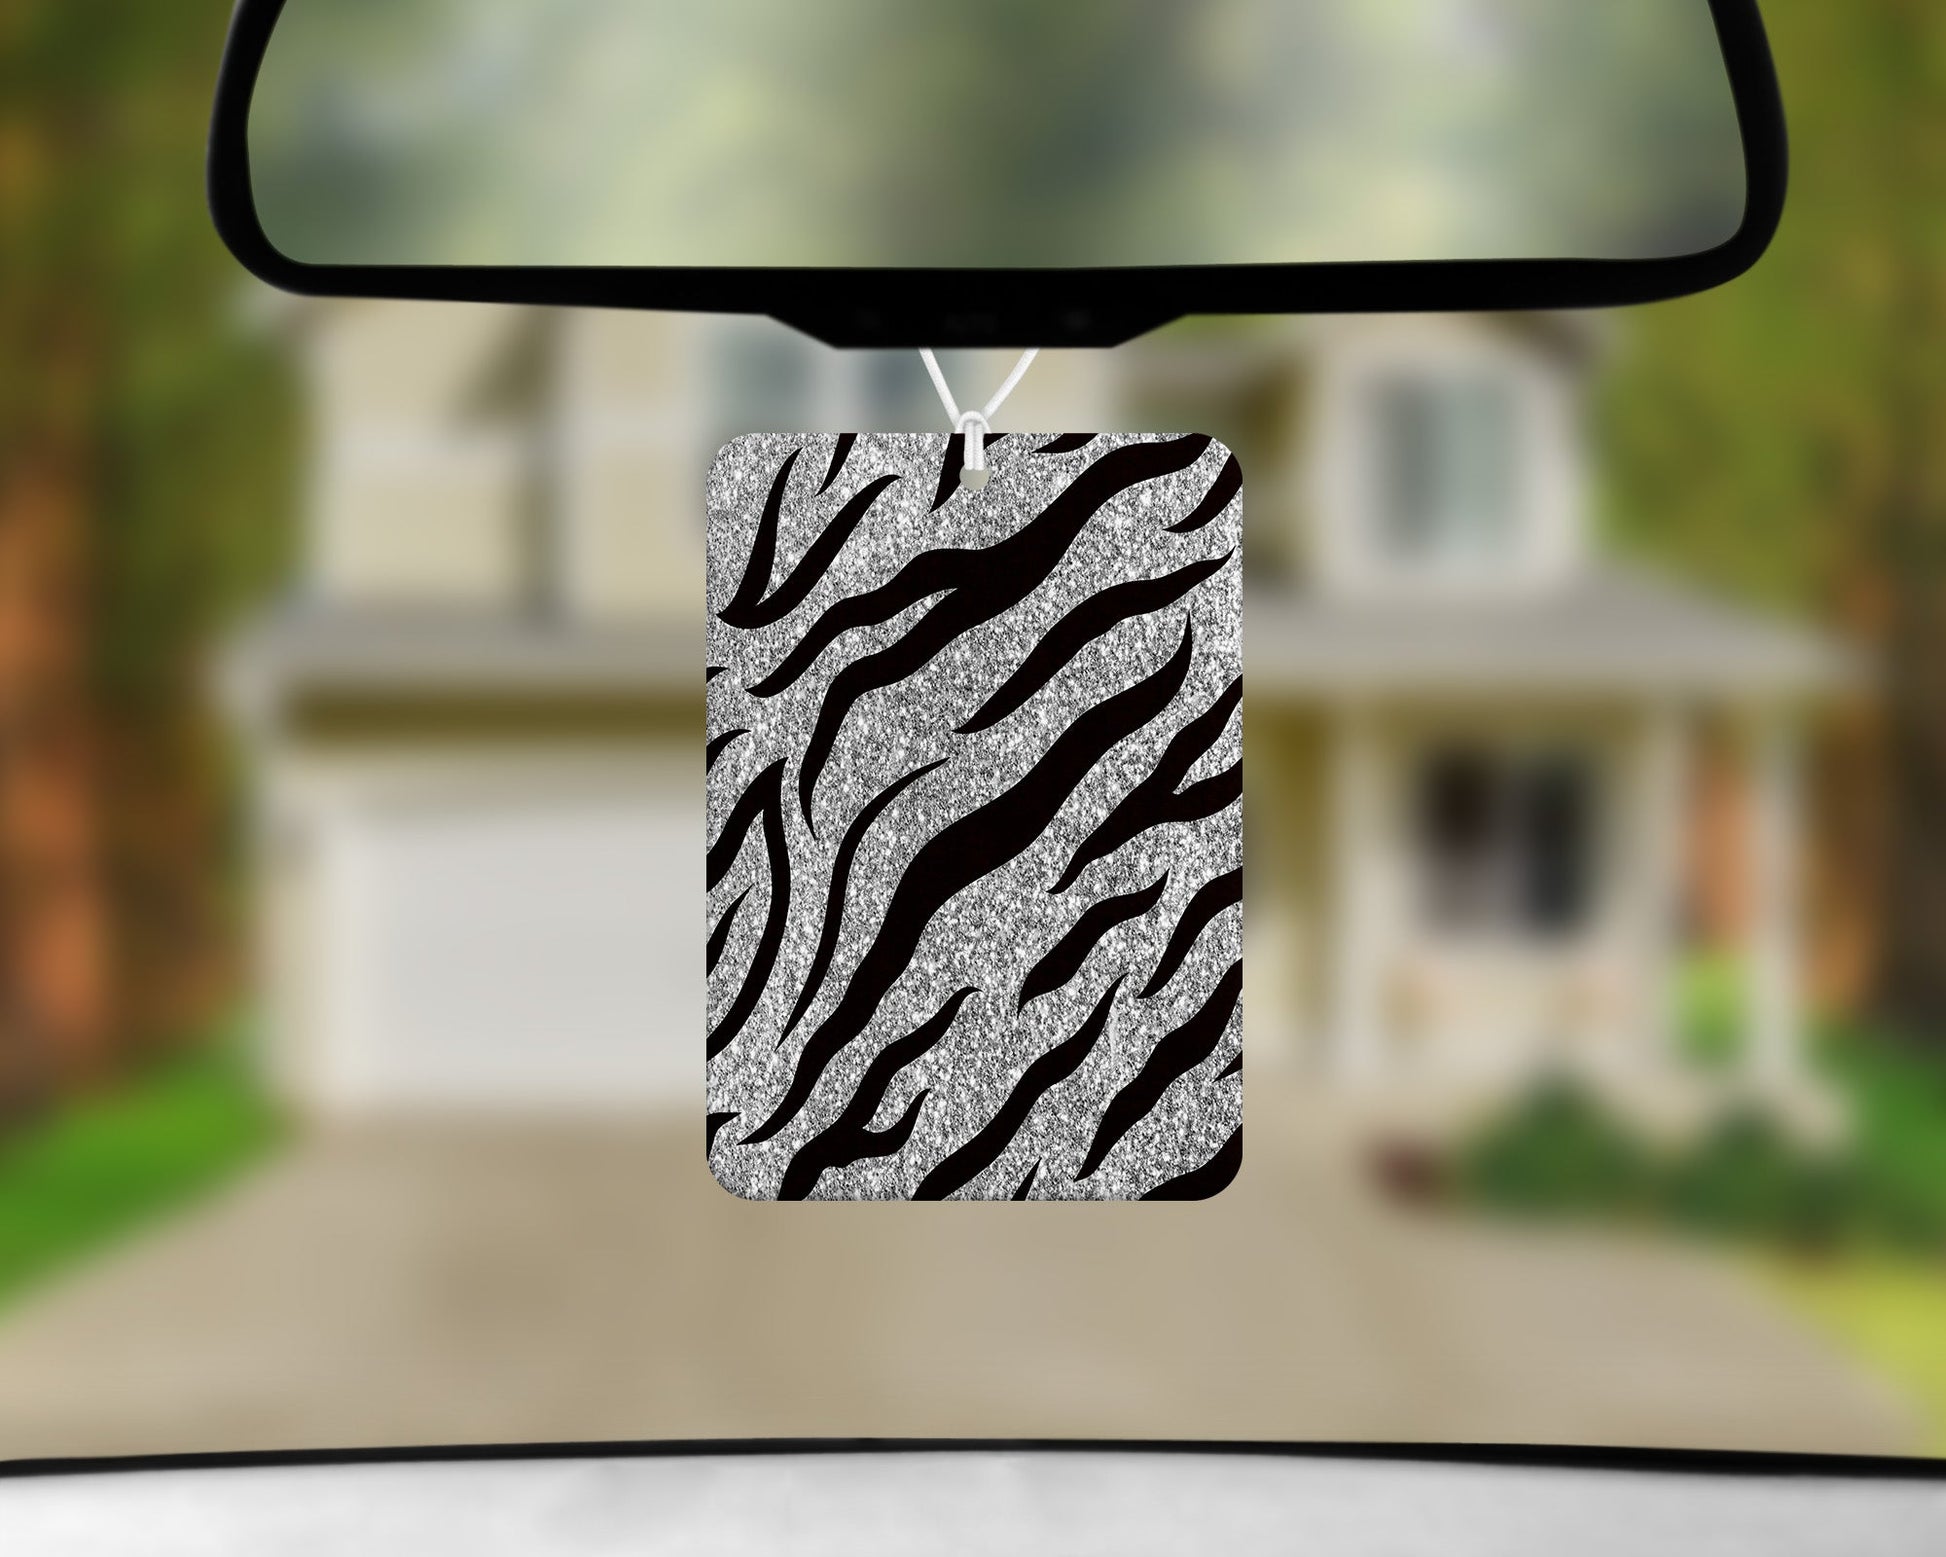 Zebra Print |Freshie|Includes Scent Bottle - Vehicle Air Freshener